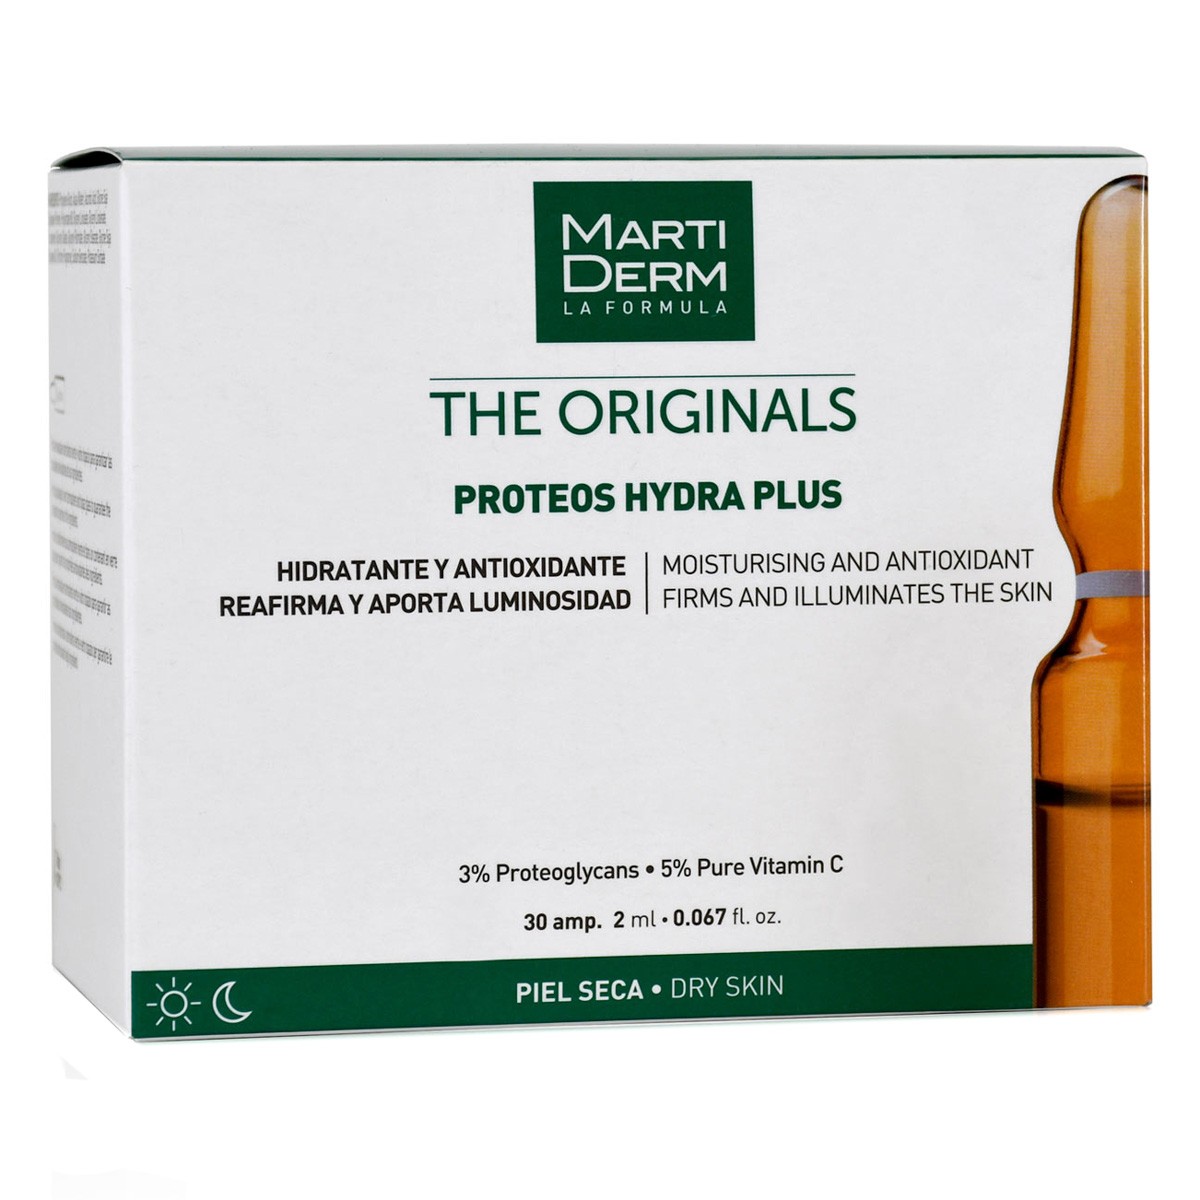 MartiDerm The Originals Proteos Hydra Plus 30 ampollas